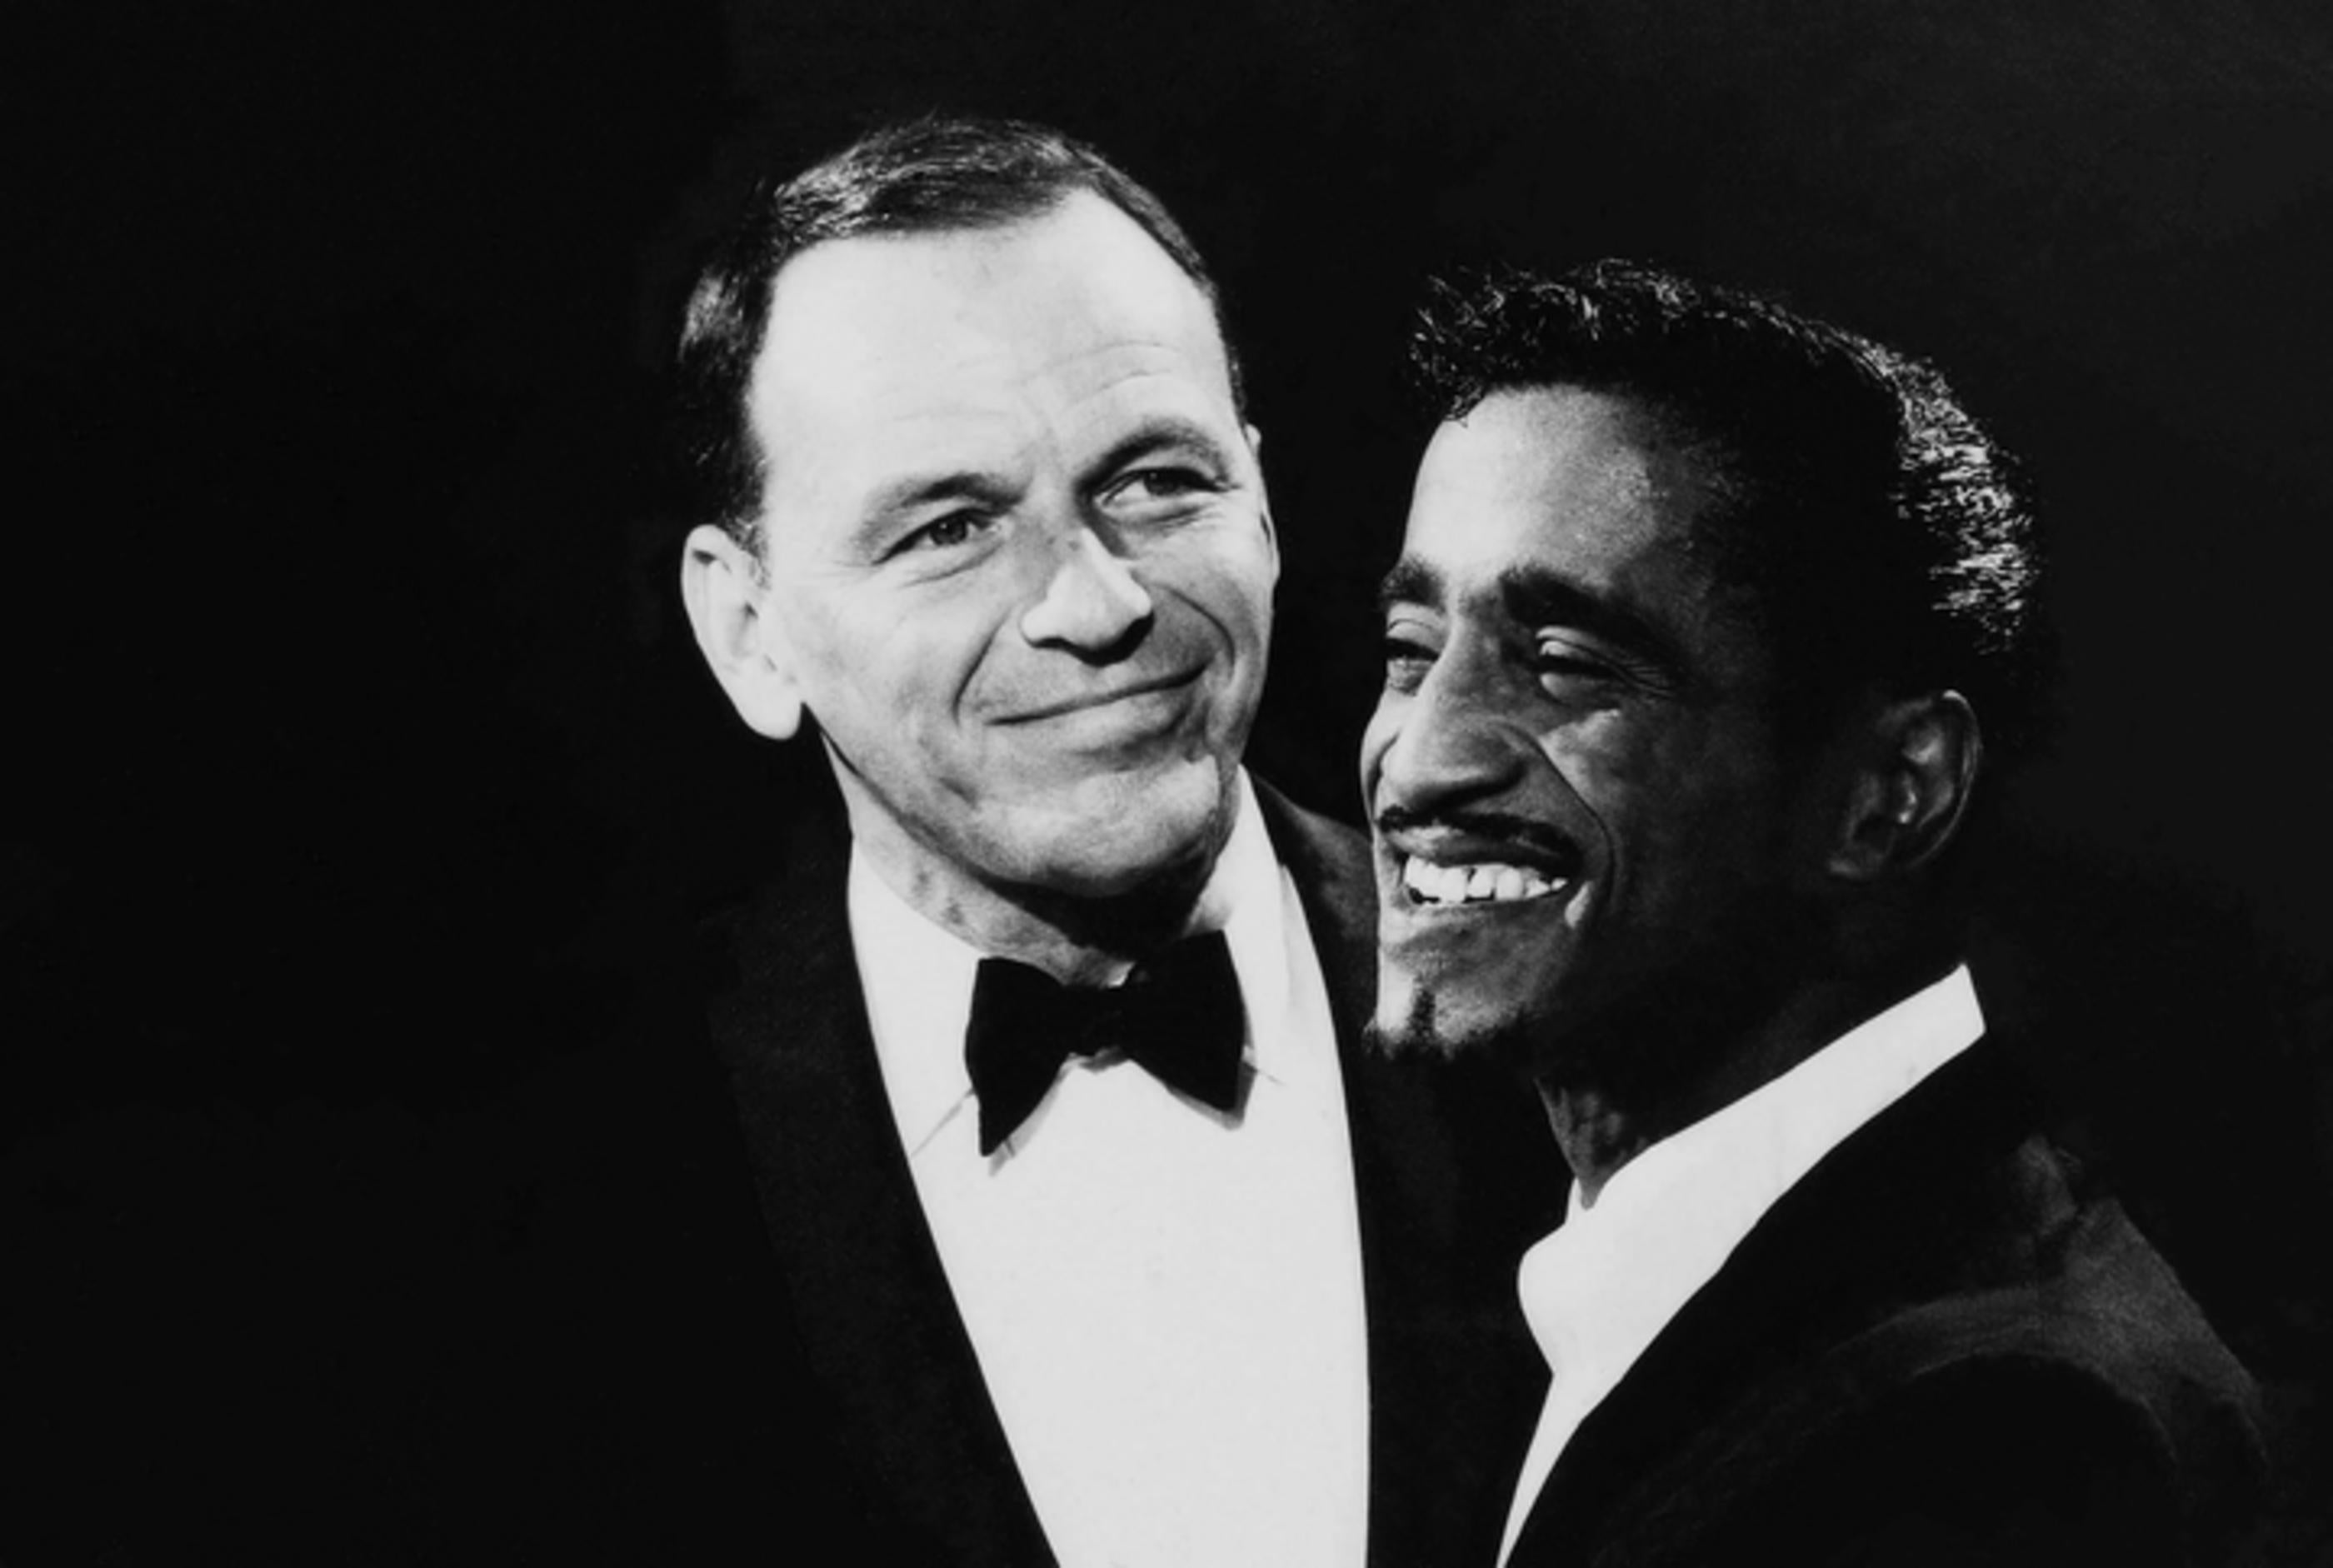 Frank Sinatra et Sammy Davis Jr. Sourire